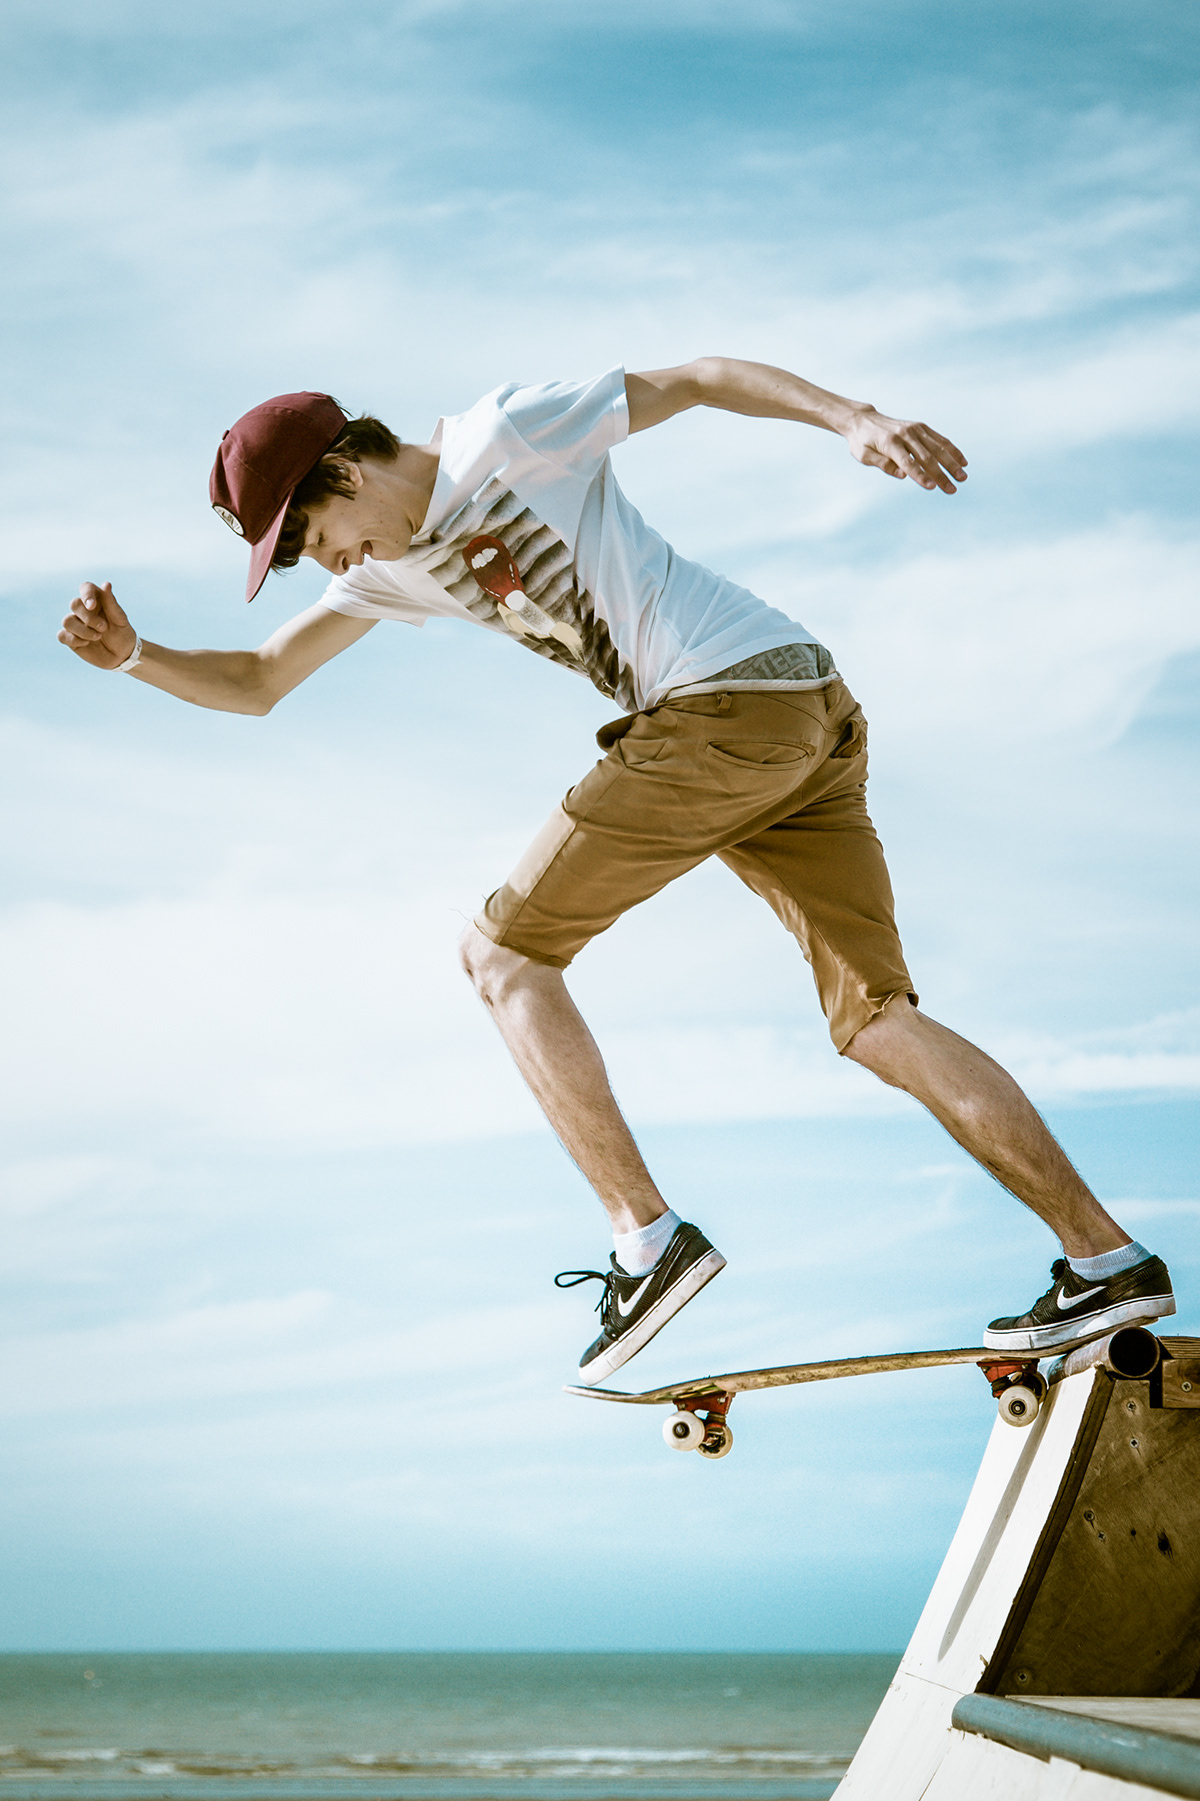 skate skateboarding extreme sports Nike finesse balance tailslide control toe